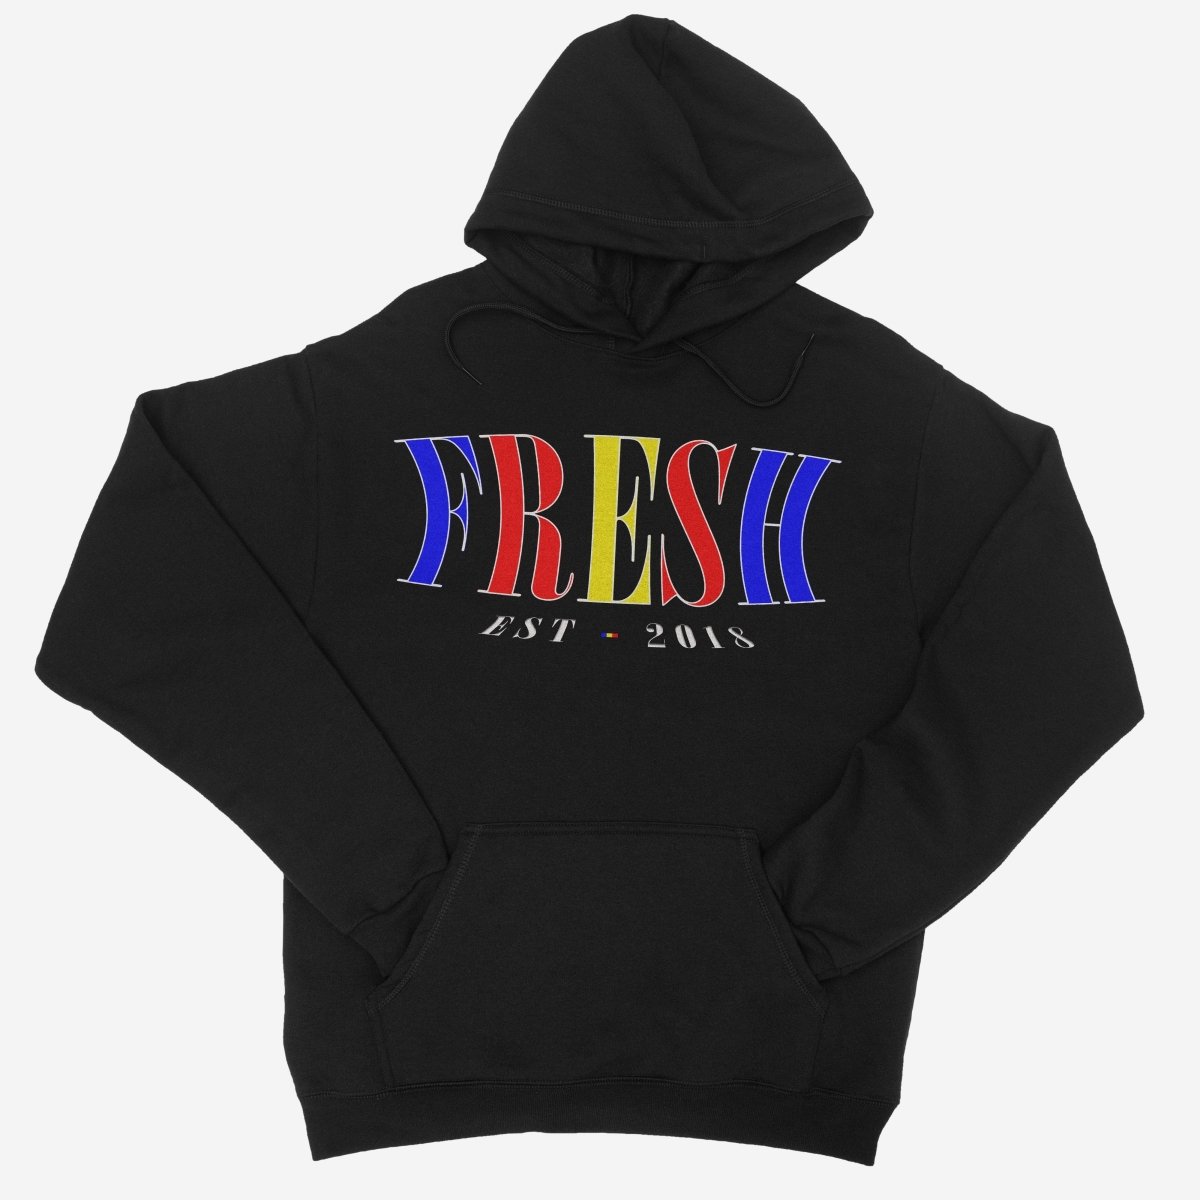 FRESH - Since 2018 Unisex Hoodie